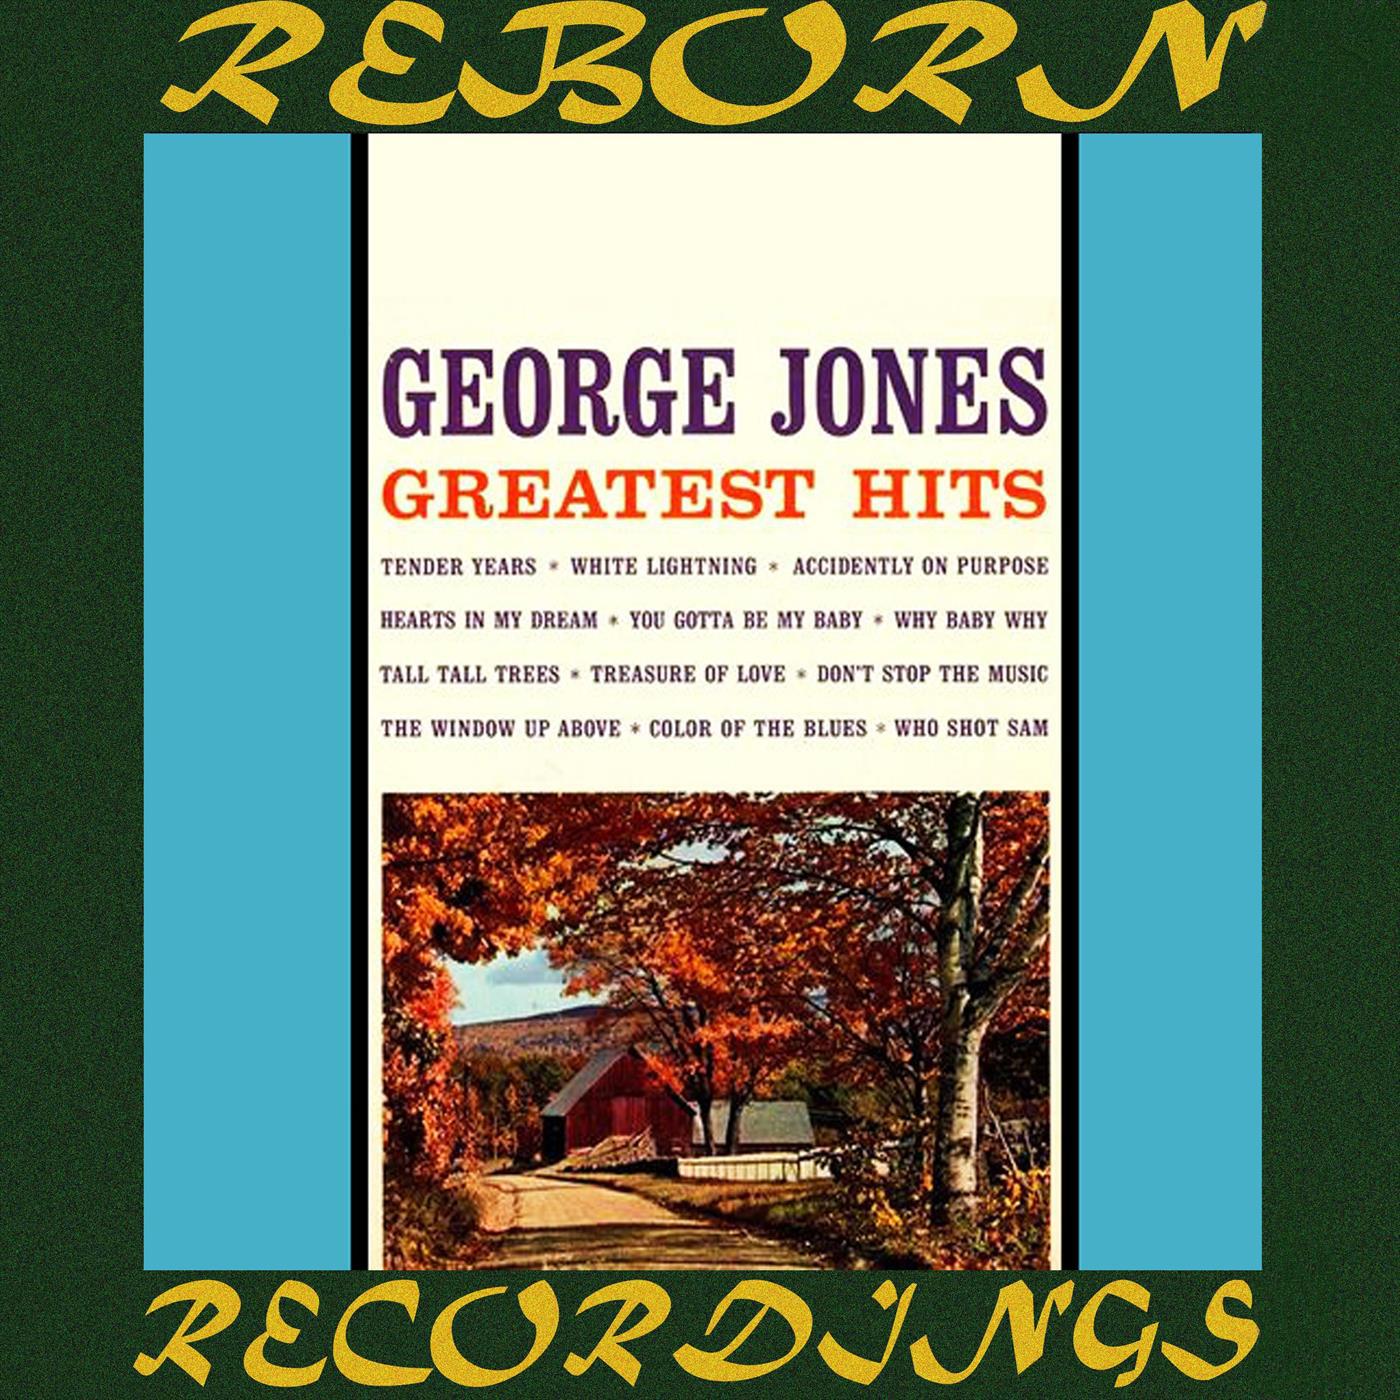 George Jones' Greatest Hits (HD Remastered)